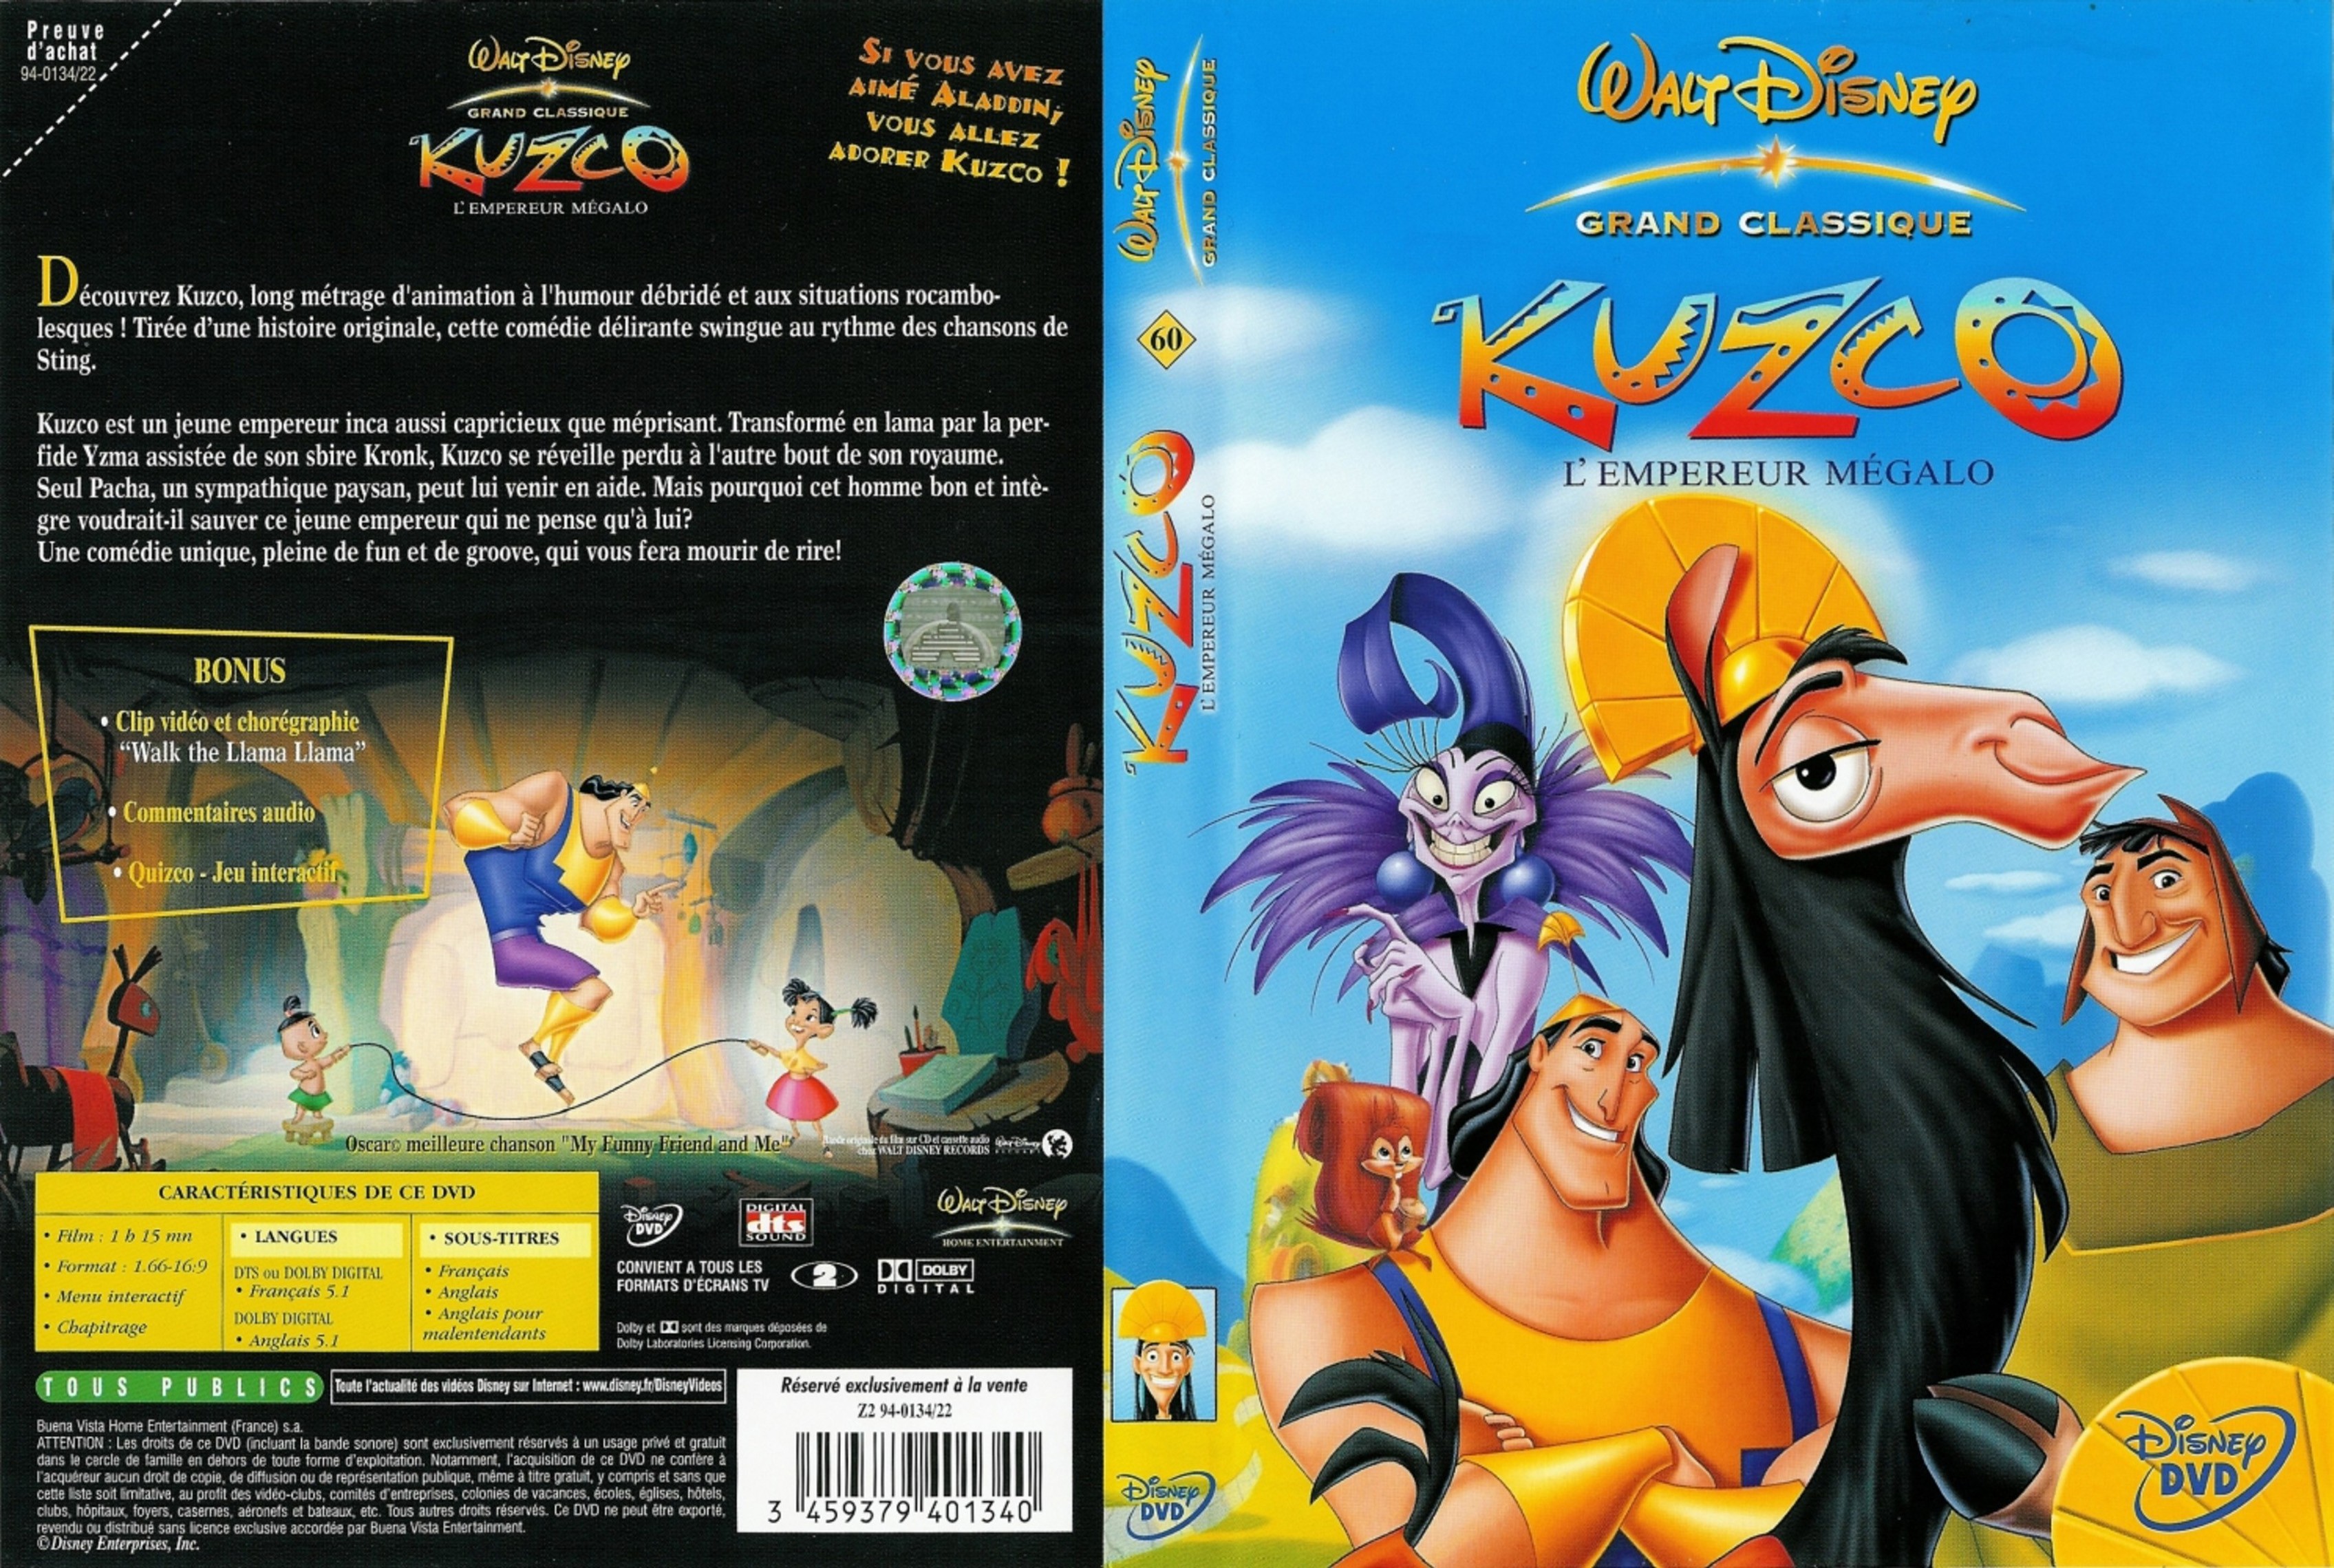 Jaquette DVD Kuzco v2